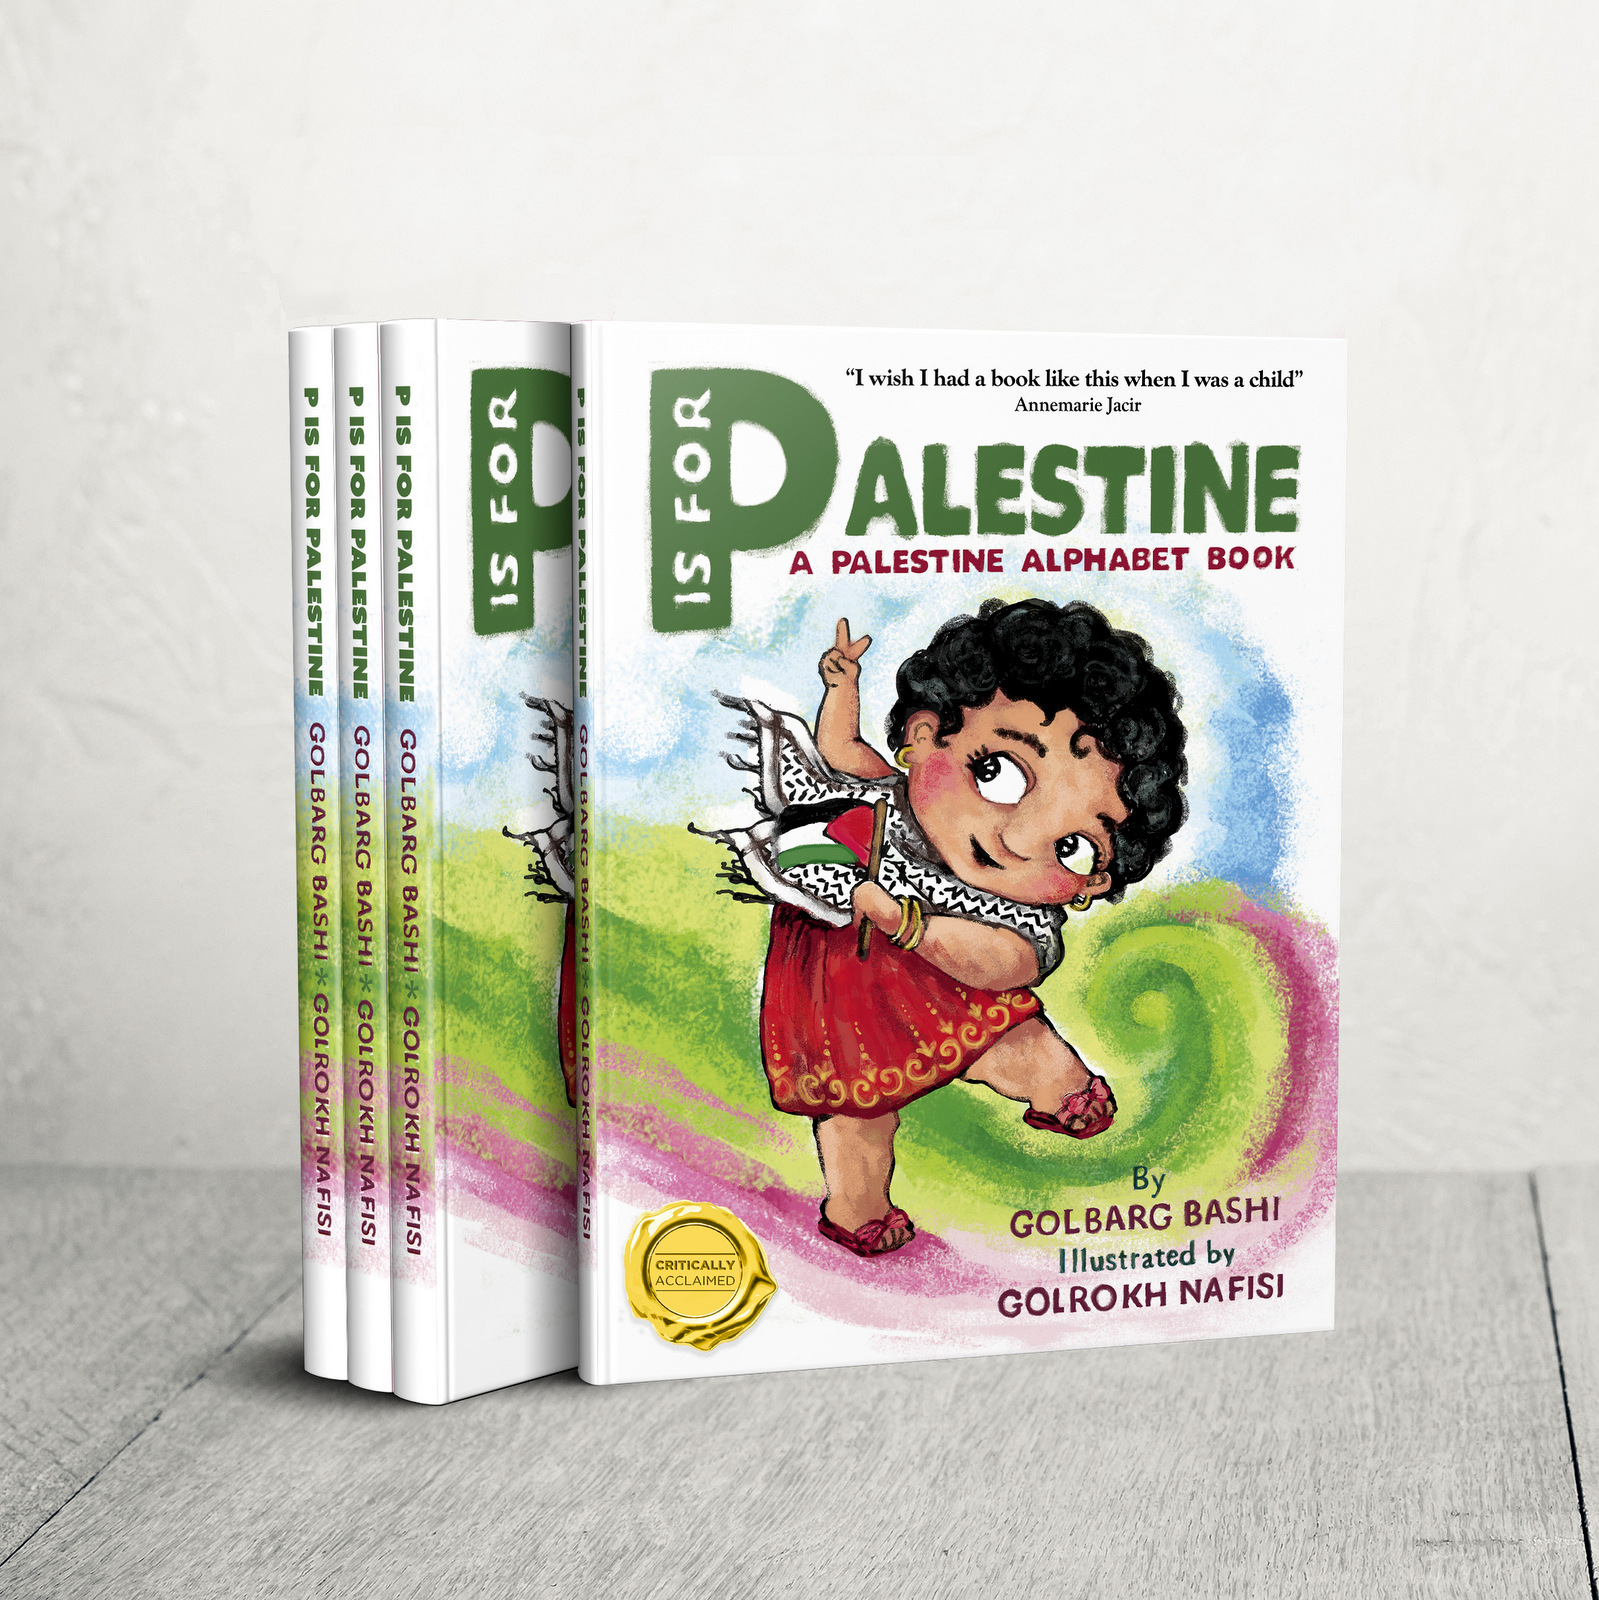 The team behind this book are Middle Eastern-Swedish storyteller Golbarg Bashi aka Dr. Bashi and Golrokh Nafisi, a globally acclaimed illustrator. (drbashi.com)